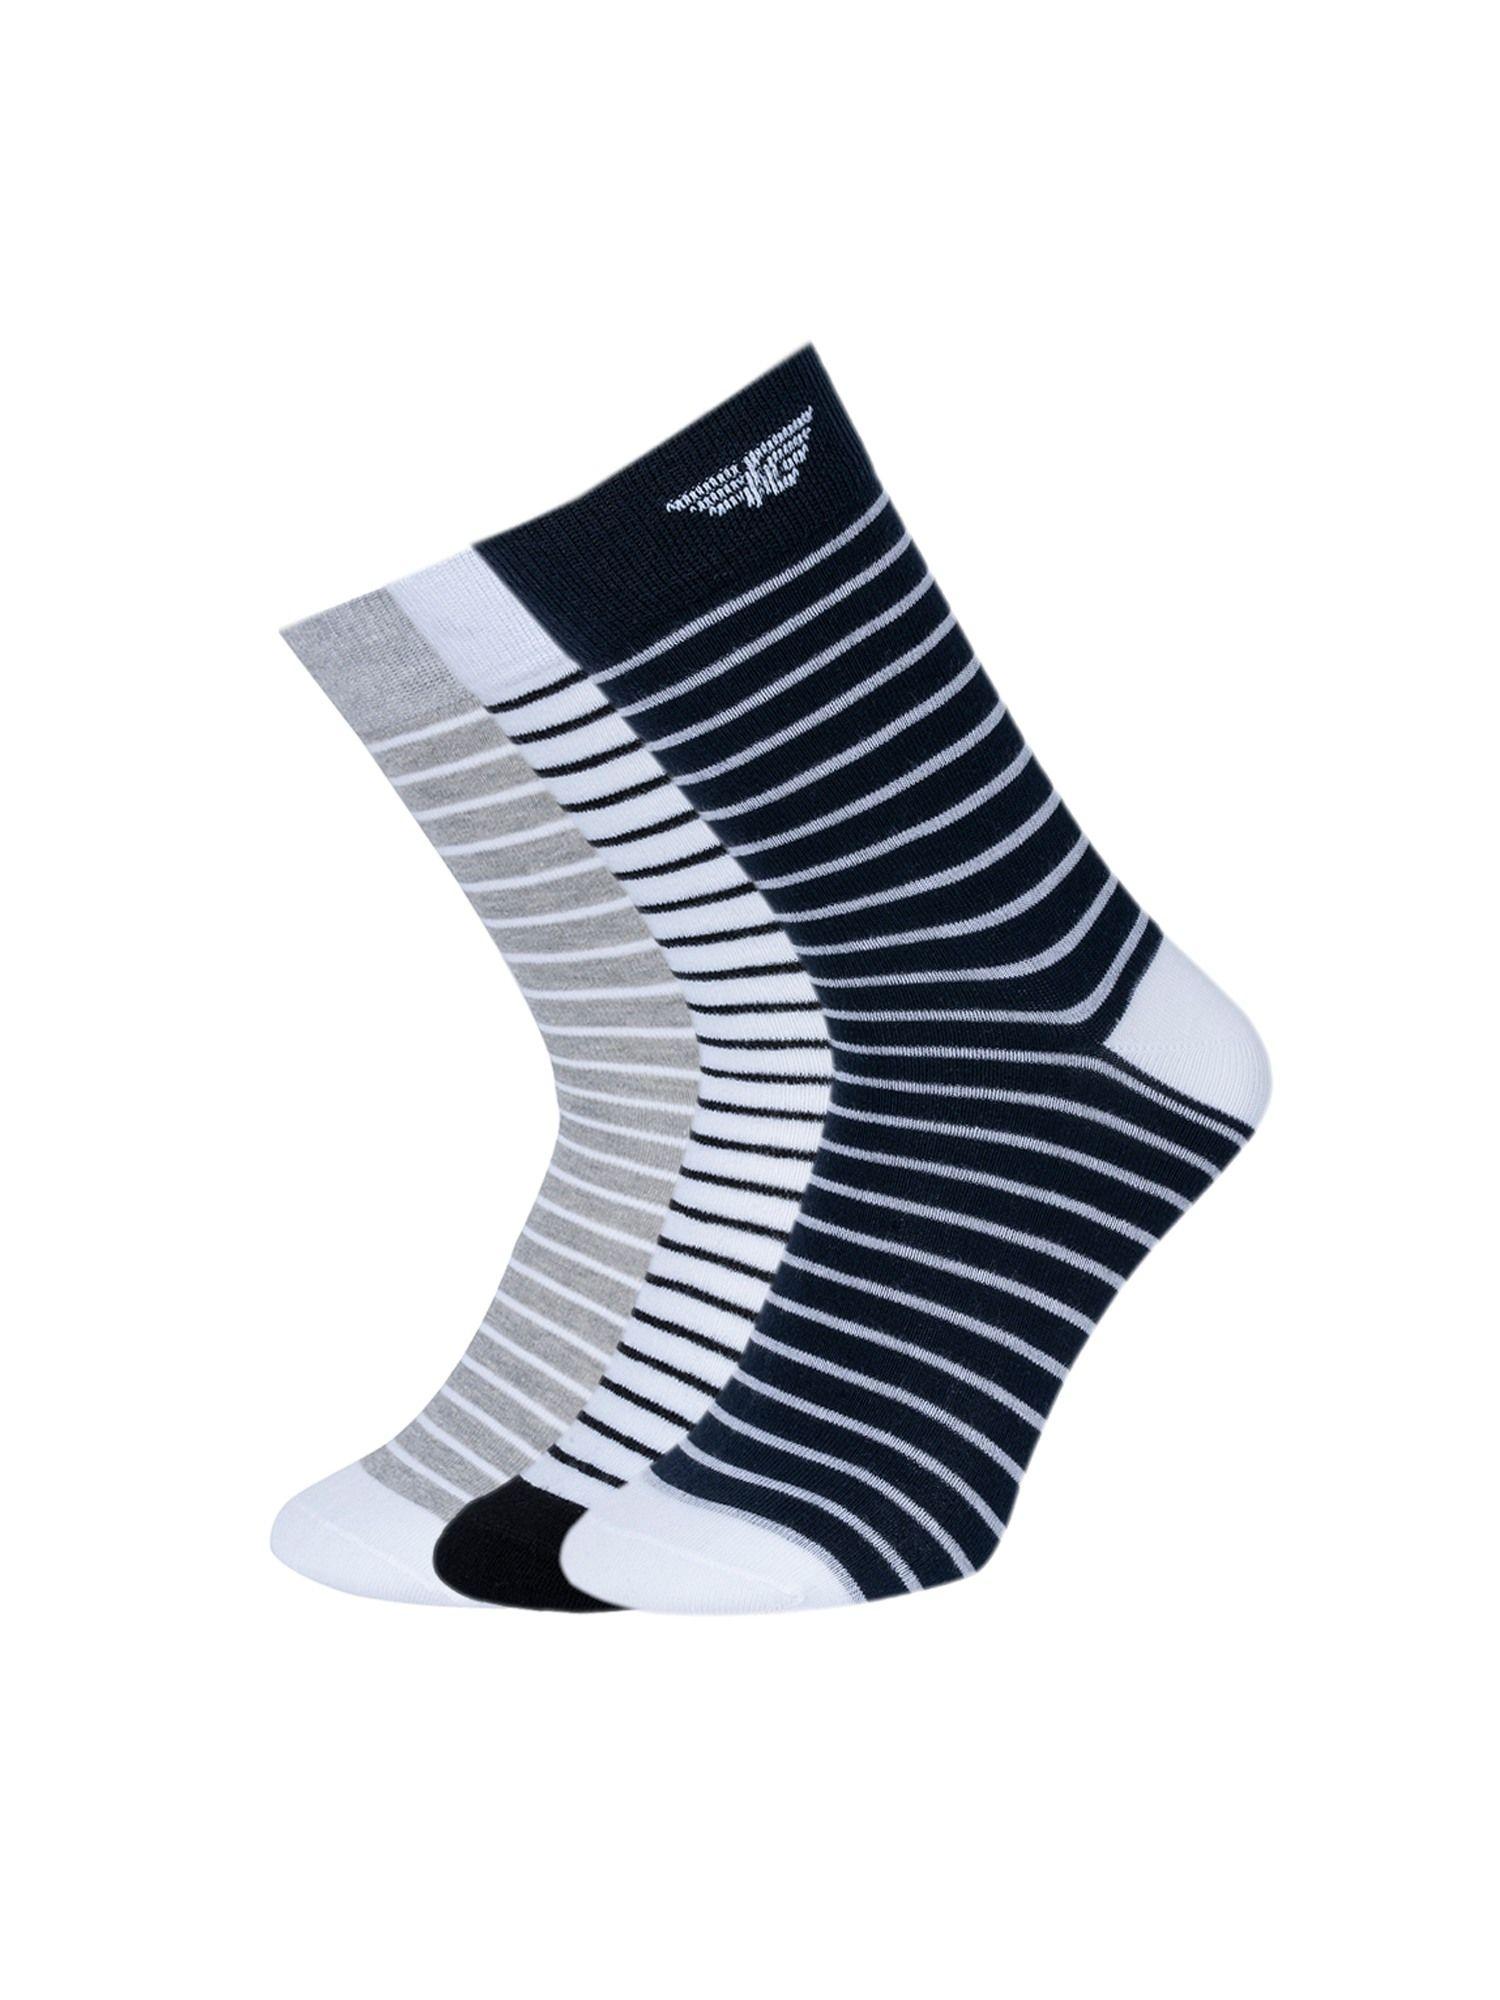 Men Multi-color Stripe Above Ankle Socks (Pack of 3)